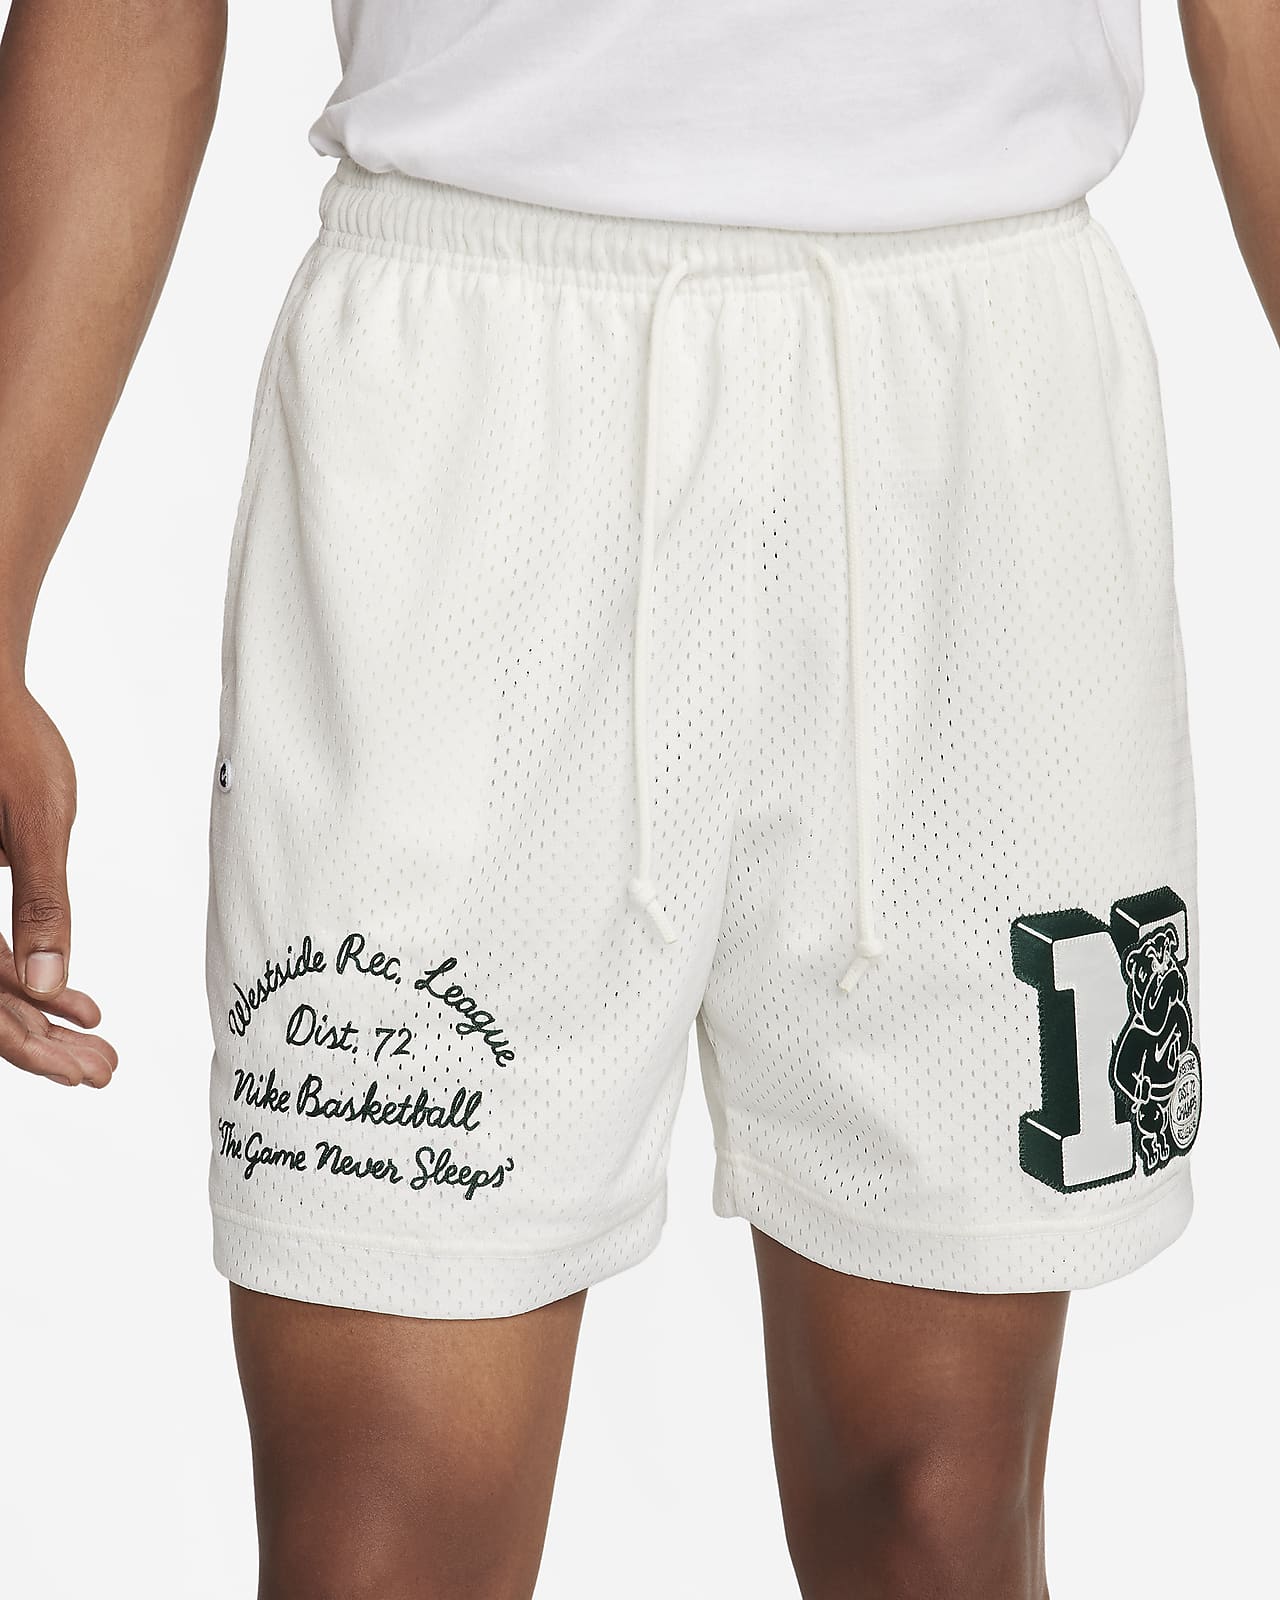 Boston Celtics Vintage Nike Authentics Basketball Shorts 